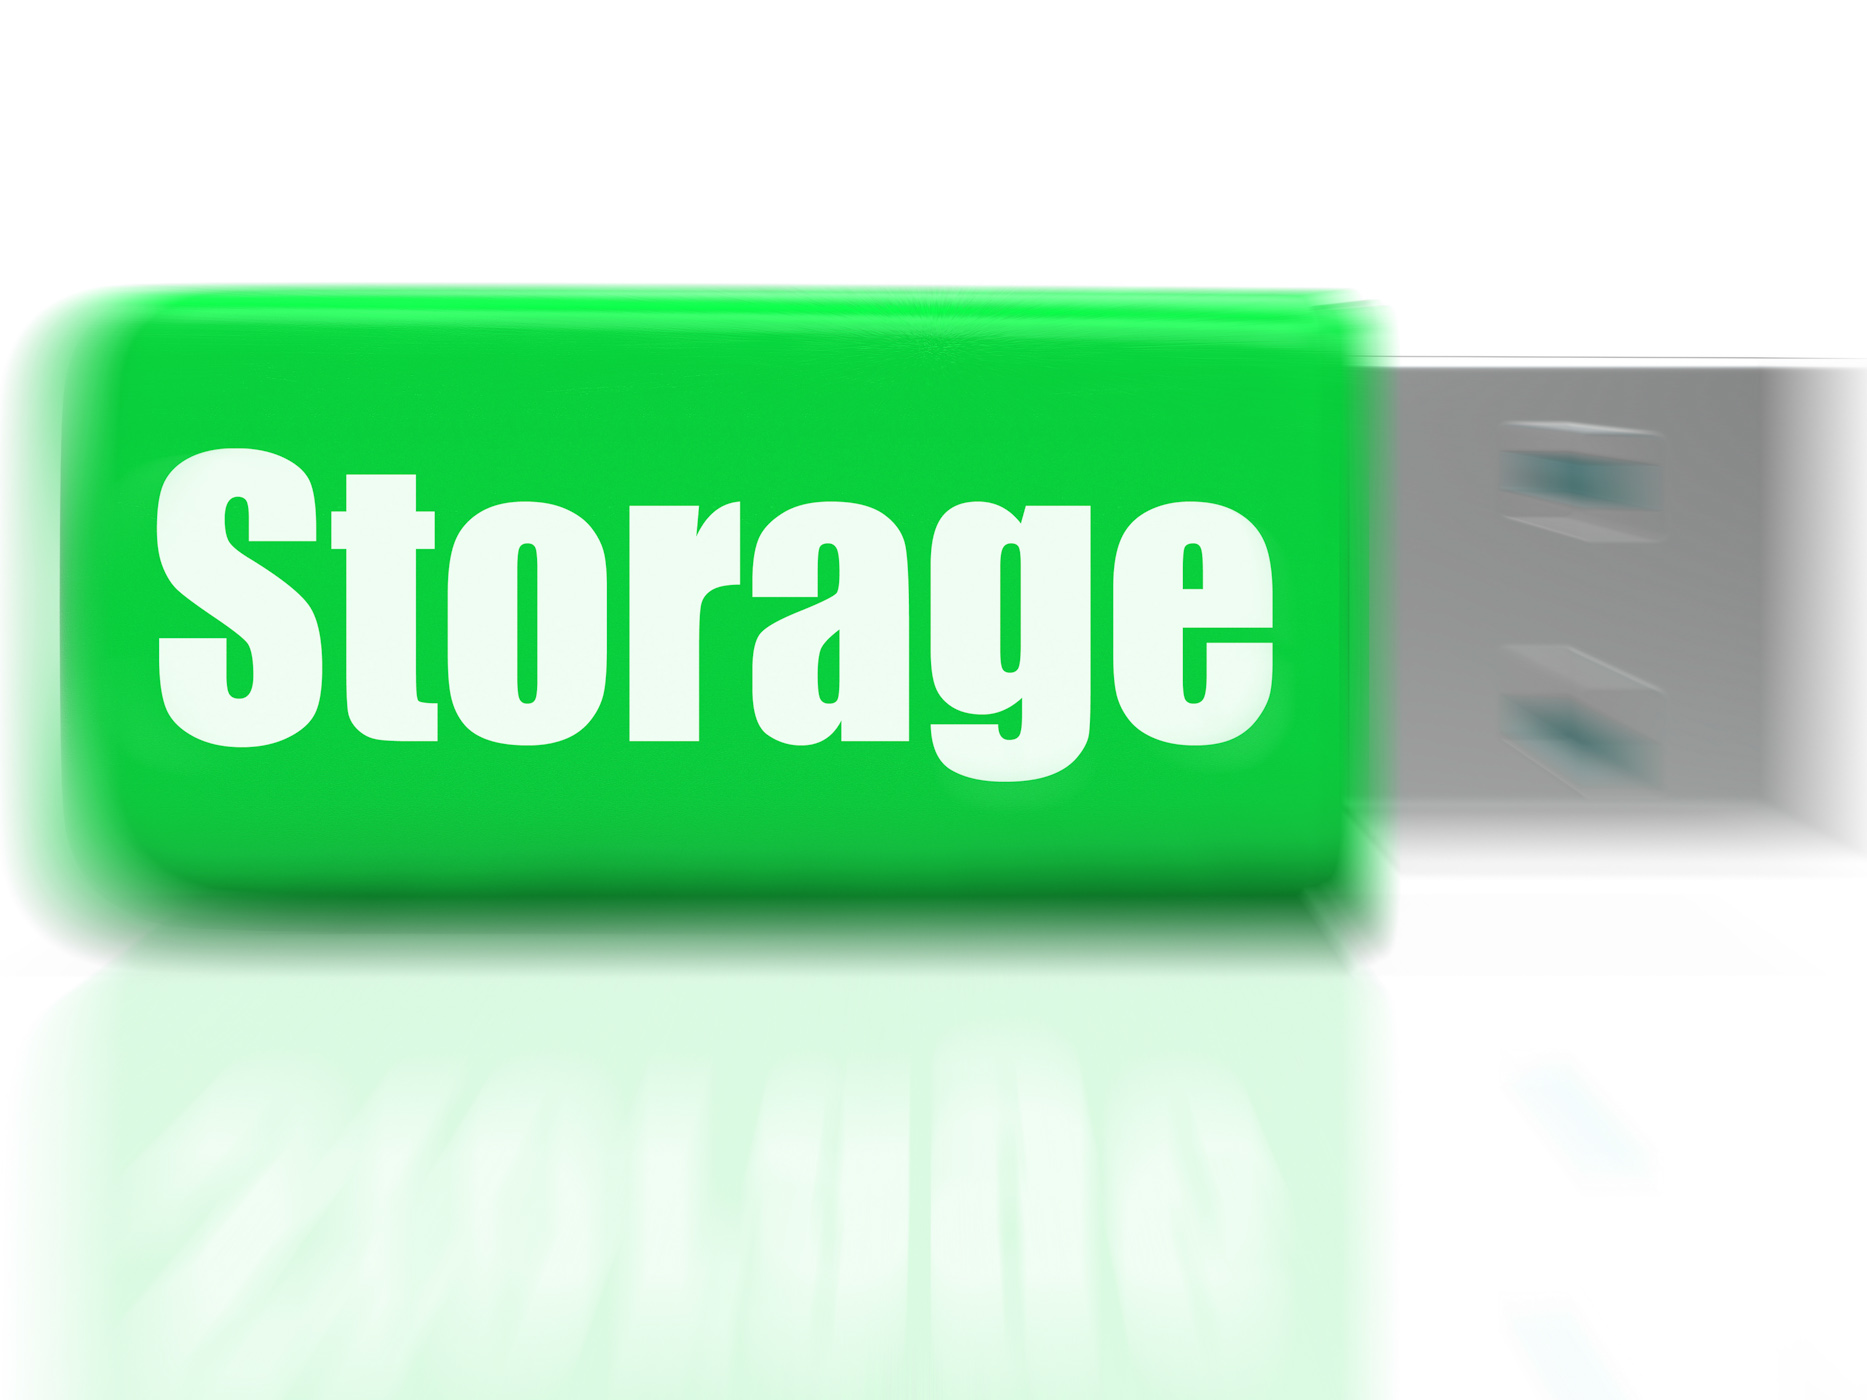 Storage usb drive shows data backup or warehousing photo